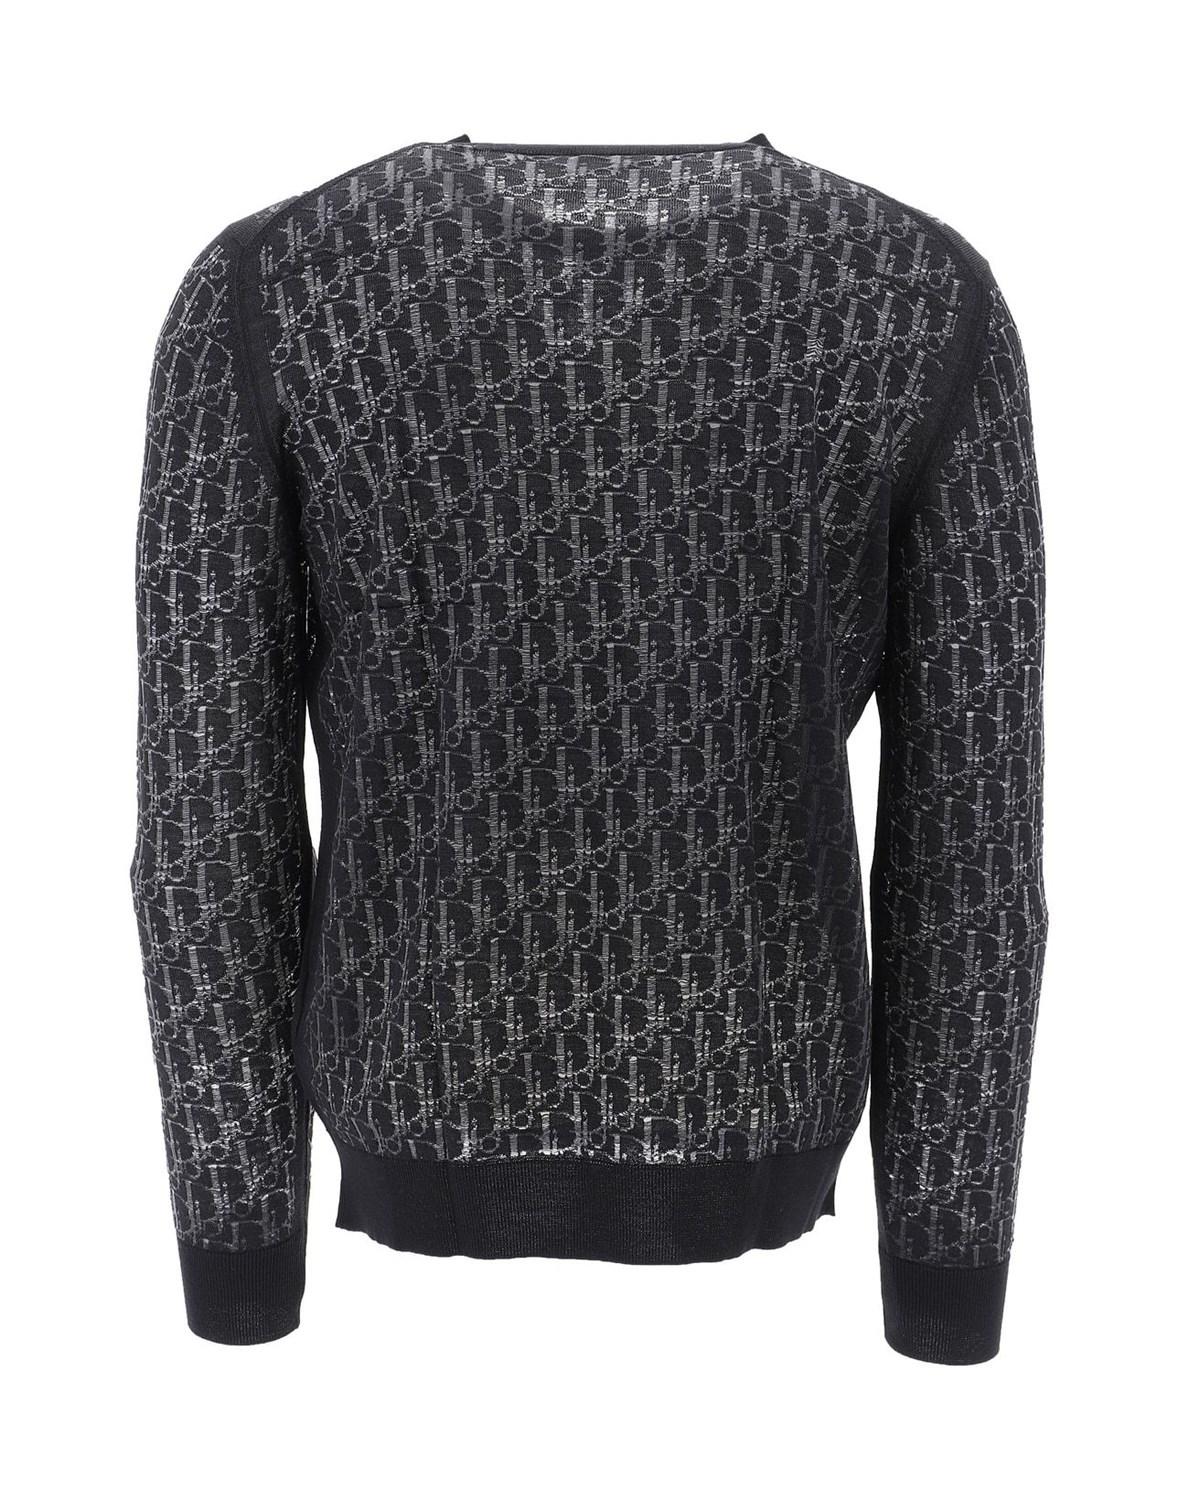 Lyst - Dior Men's 923m620at936900 Black Wool Sweater in Black for Men